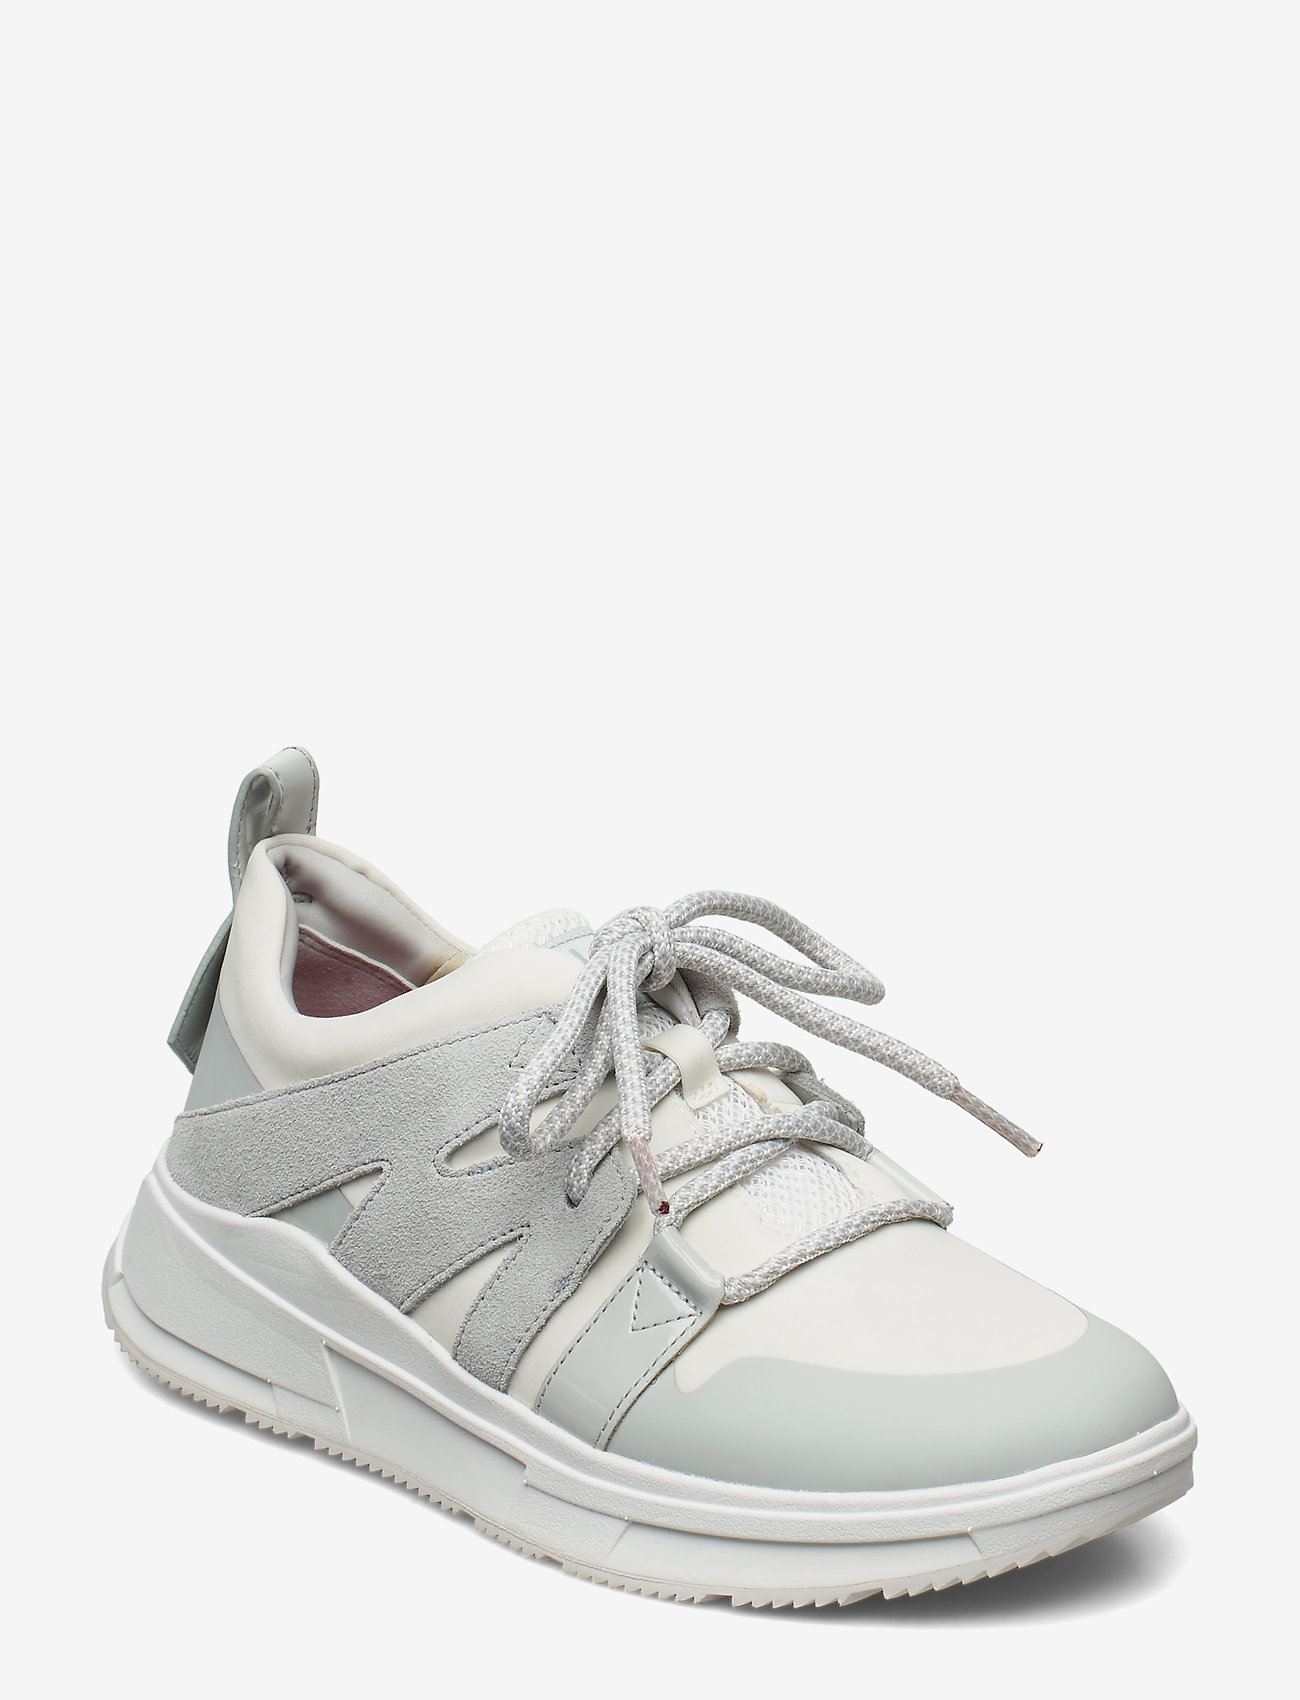 Carita Sneakers (Urban White) (78 